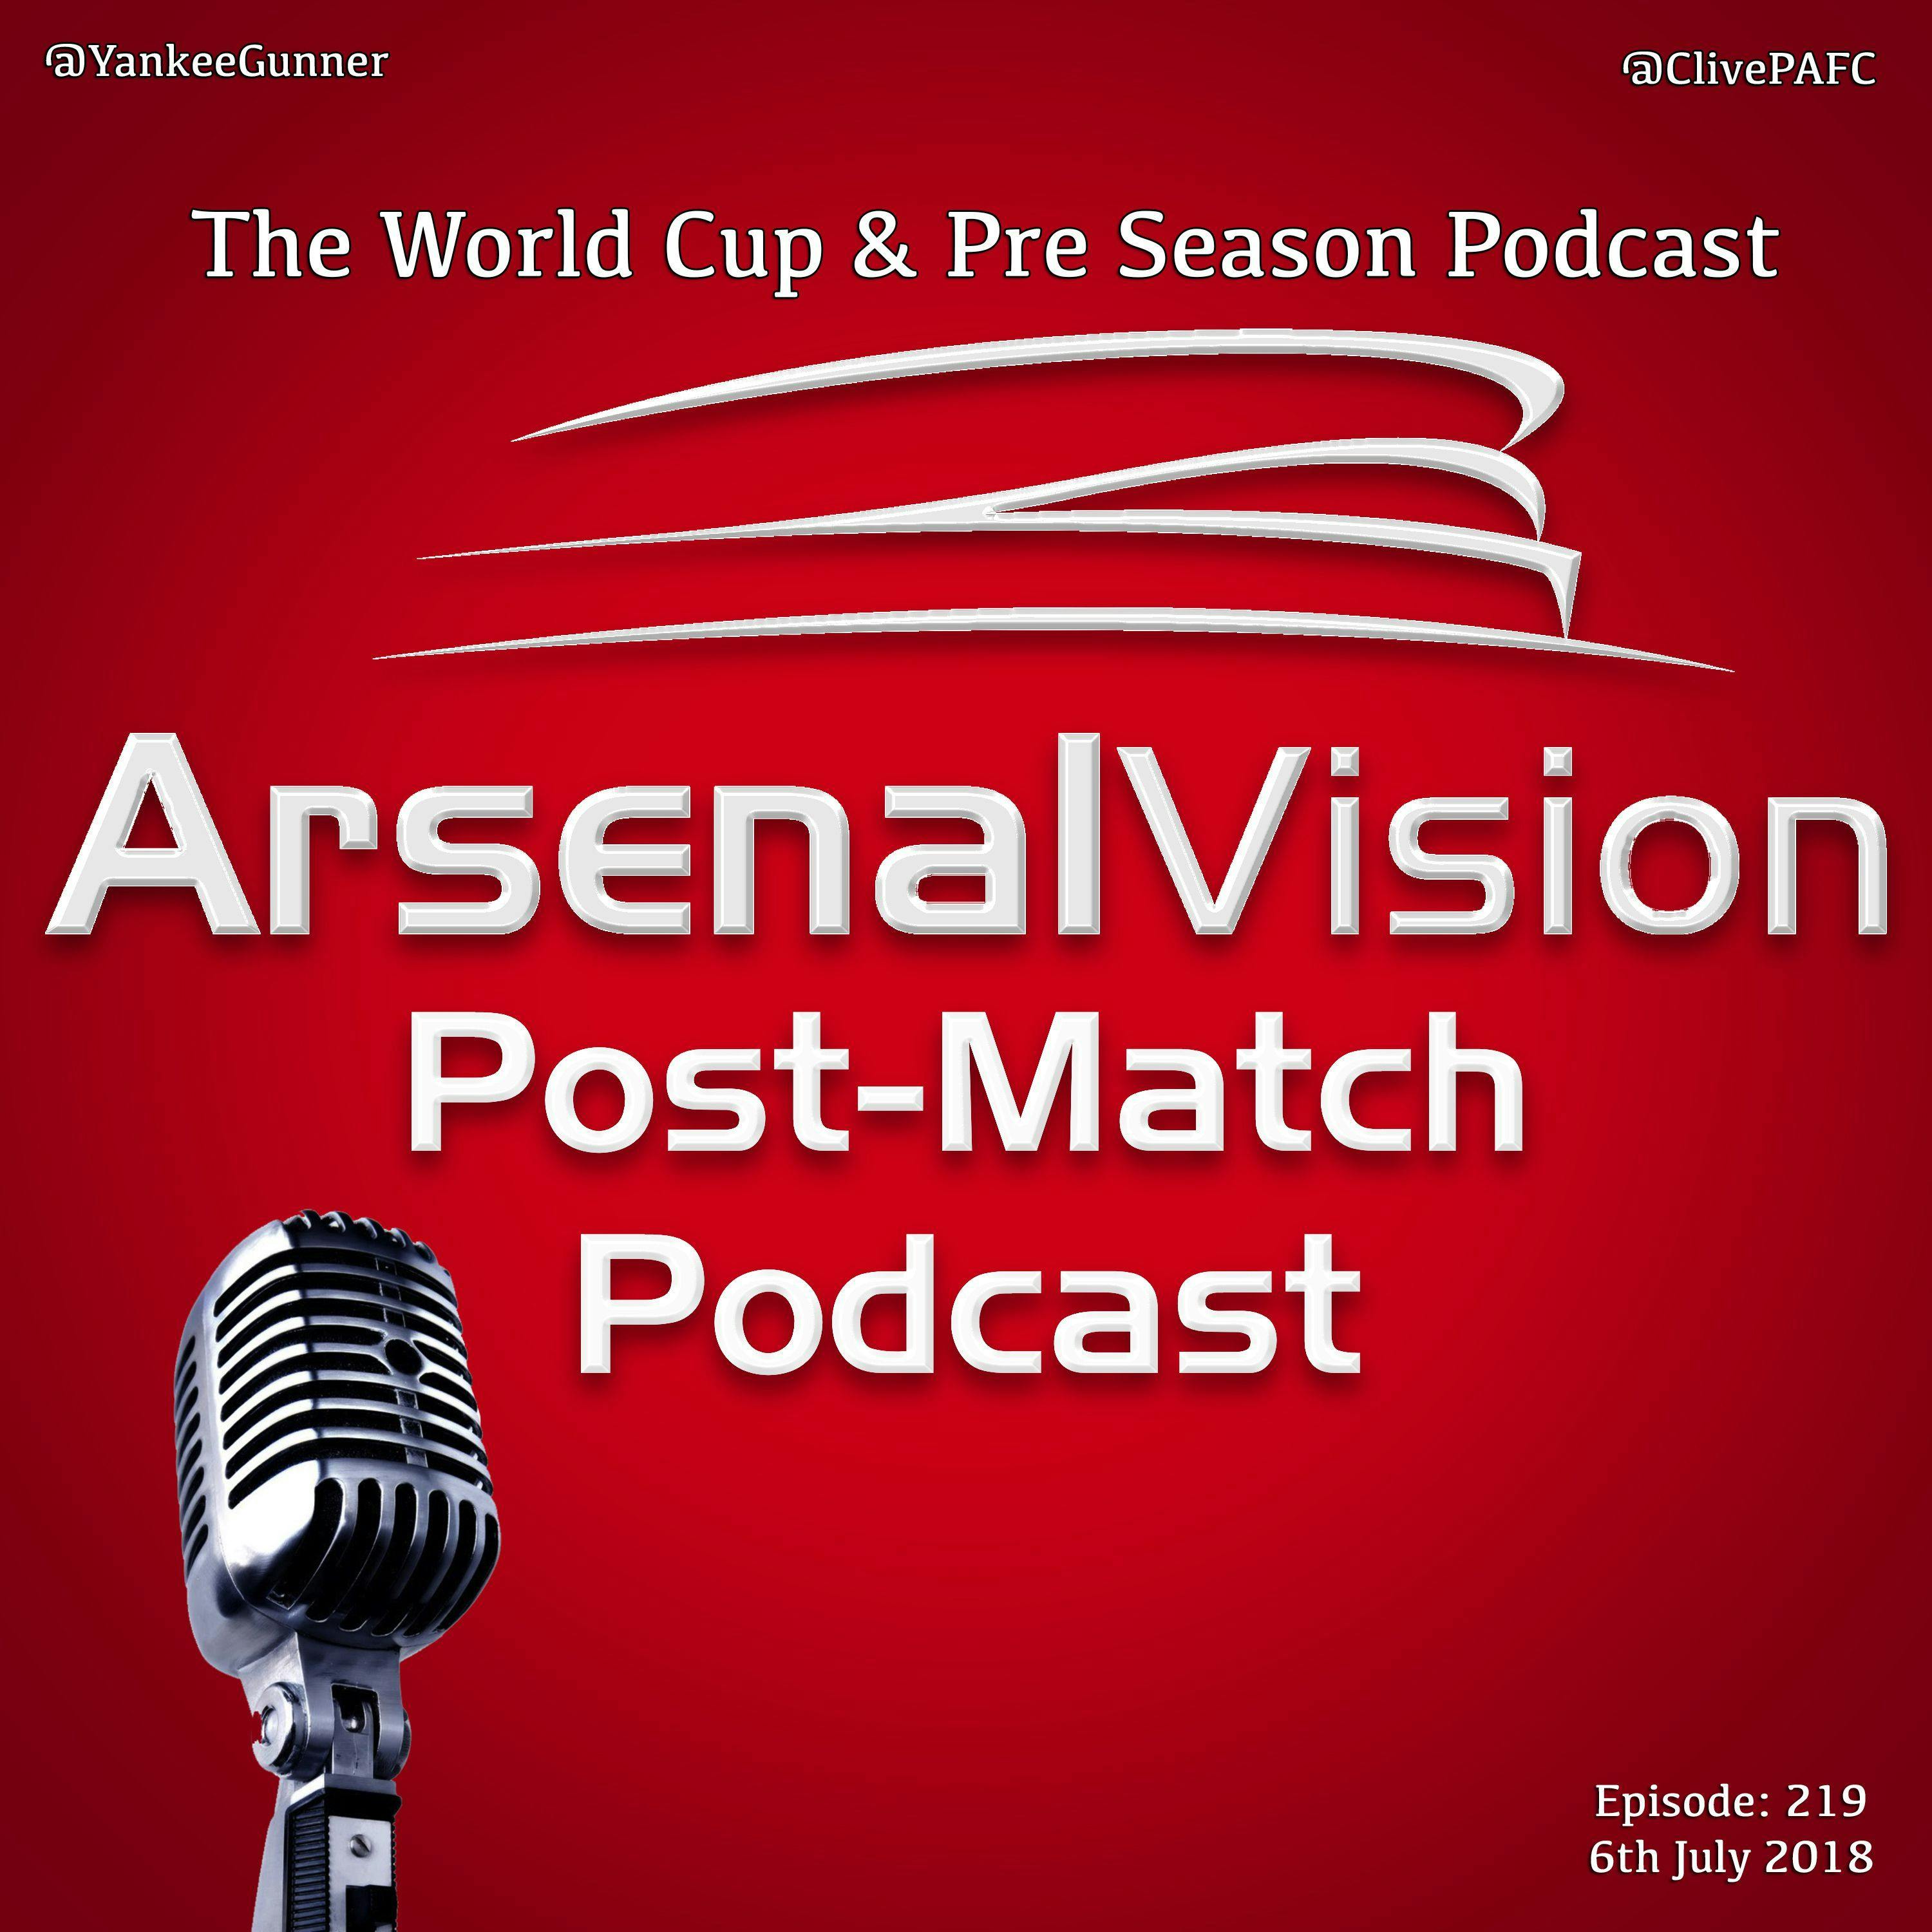 Episode 219 - The World Cup & Pre Season Podcast